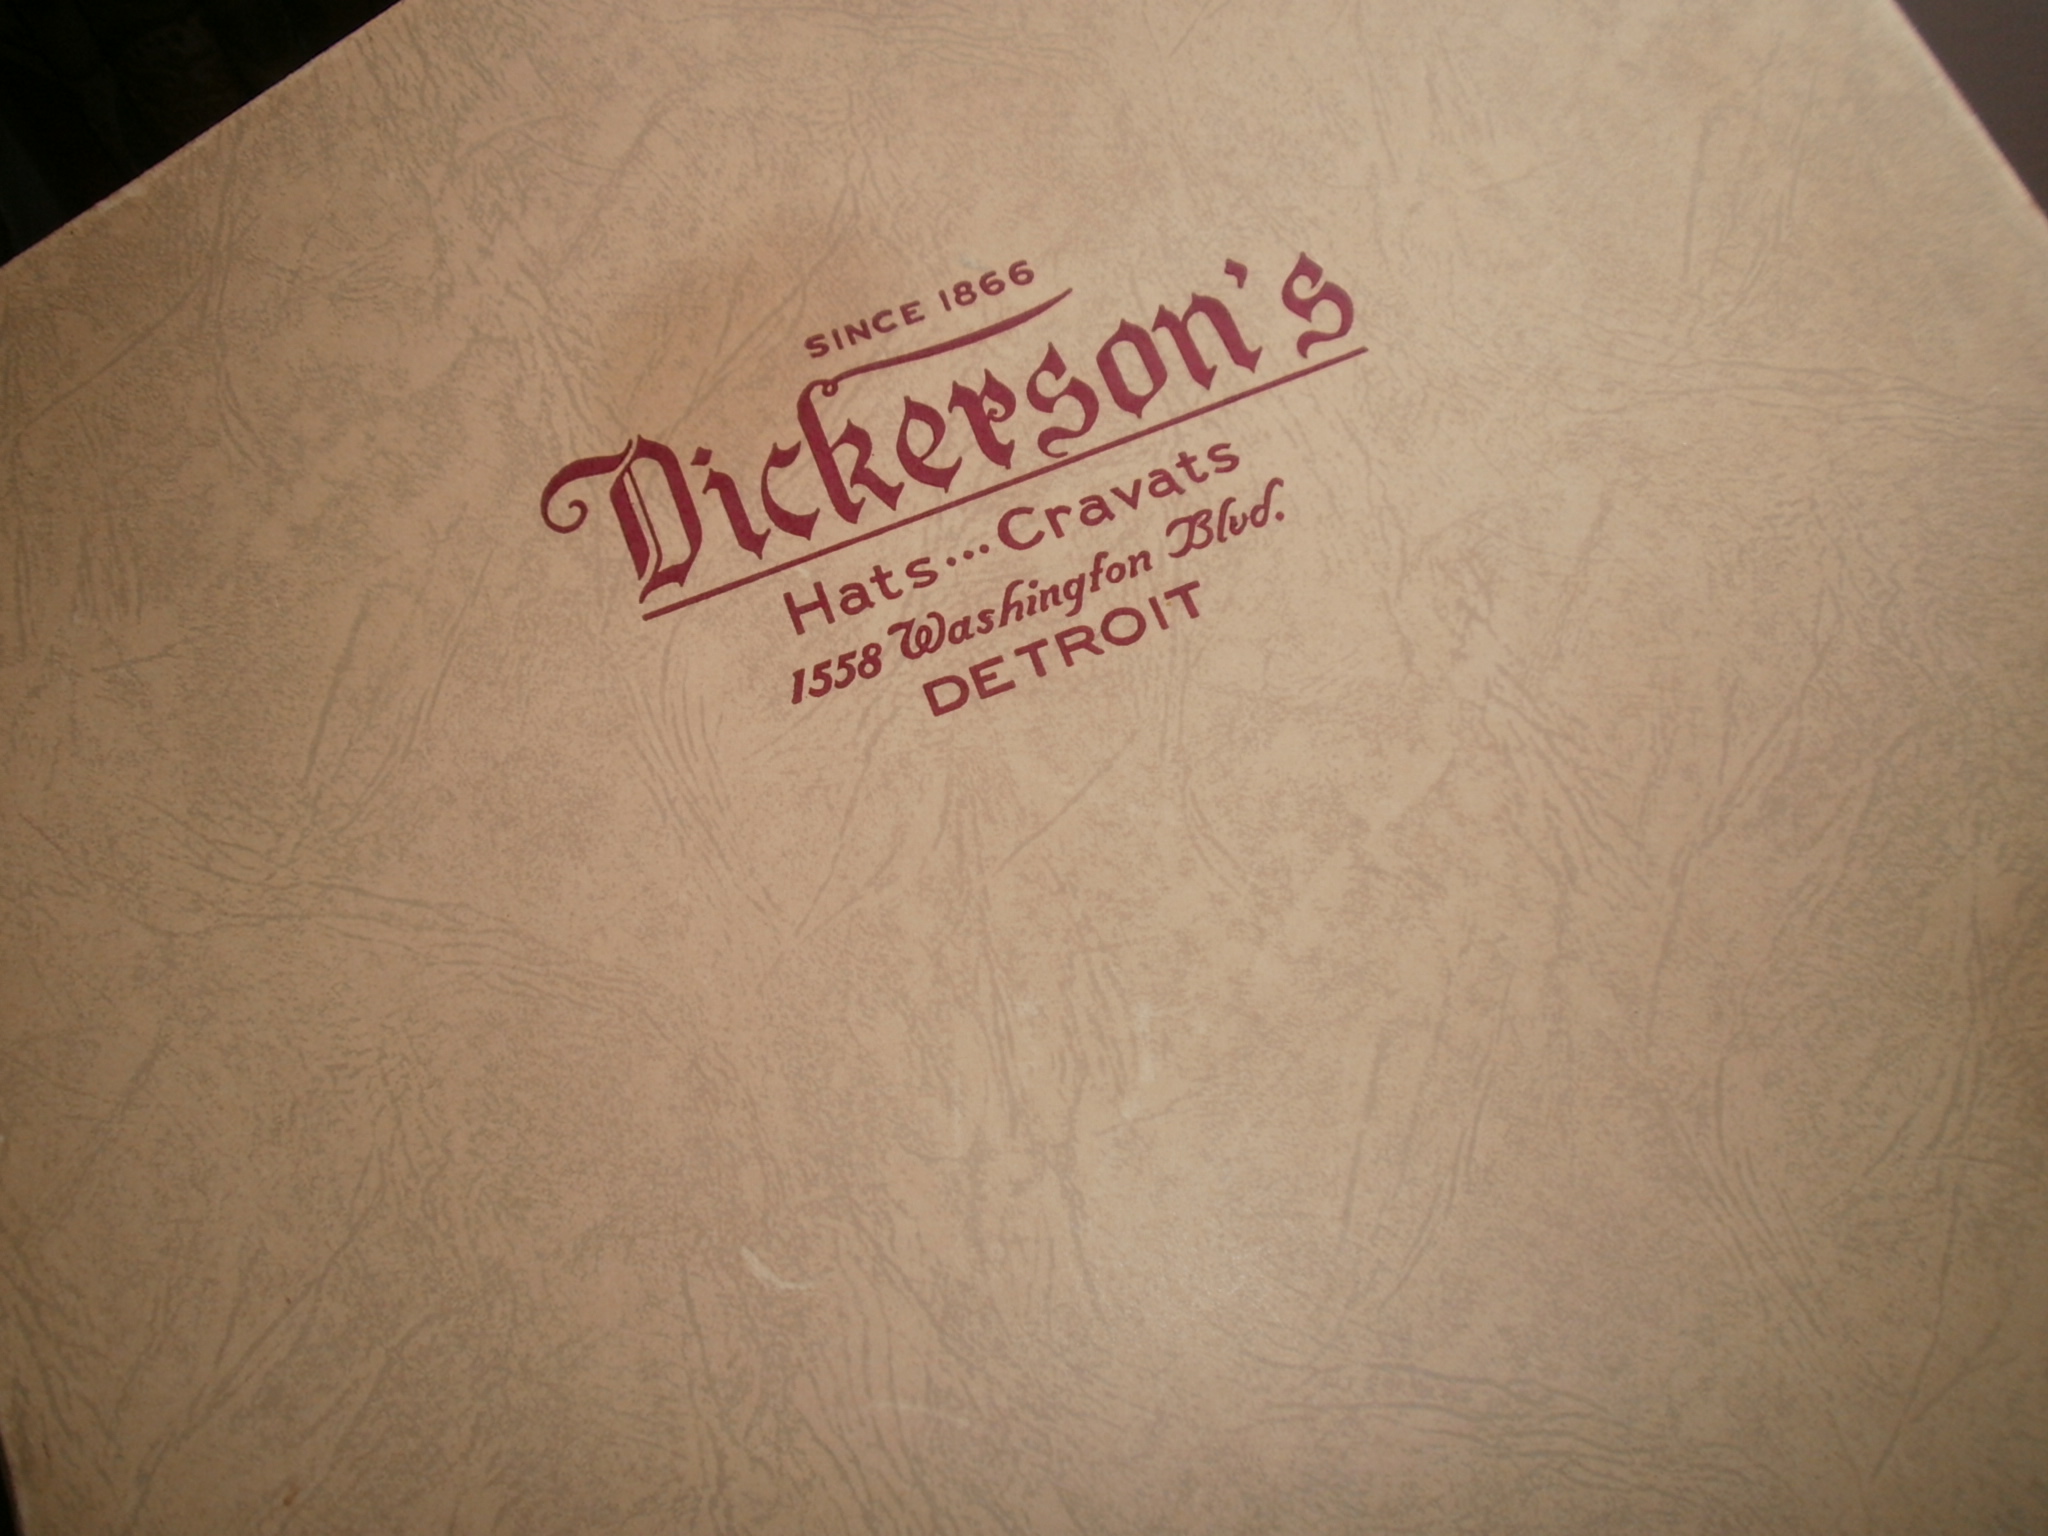 Dickerson_Hat_Box.JPG